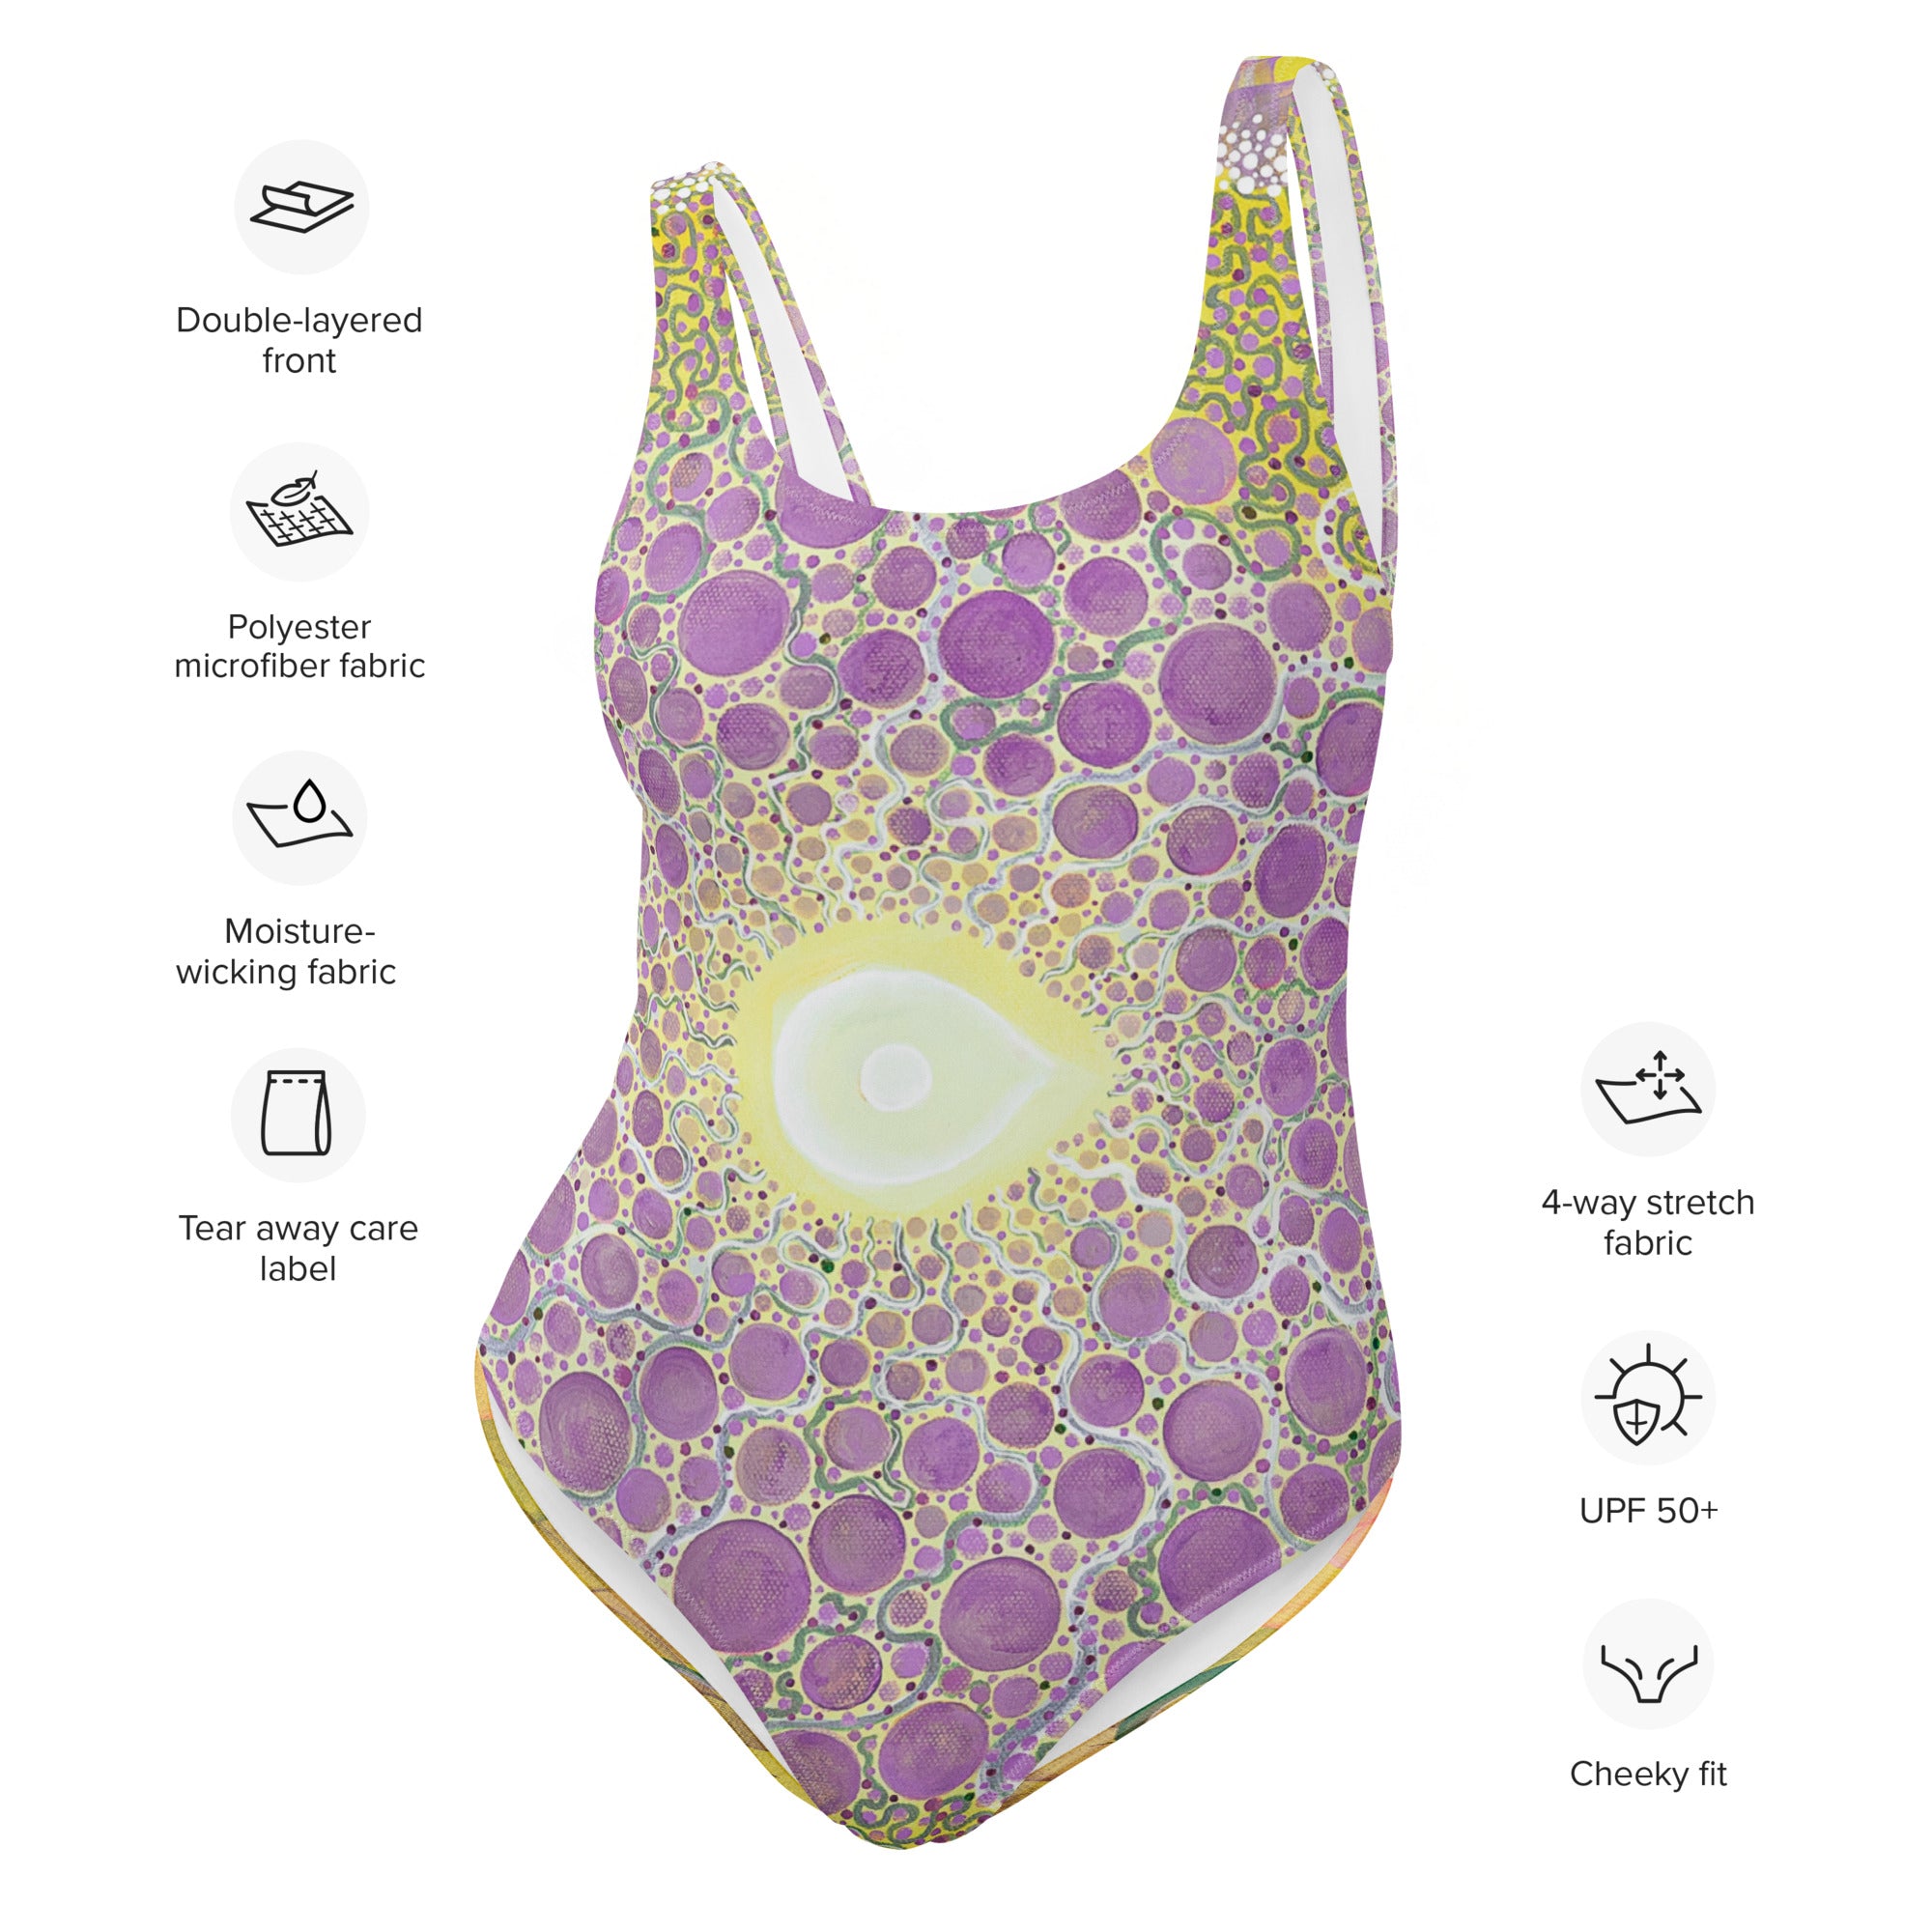 Purple Bloom One-Piece Swimsuit